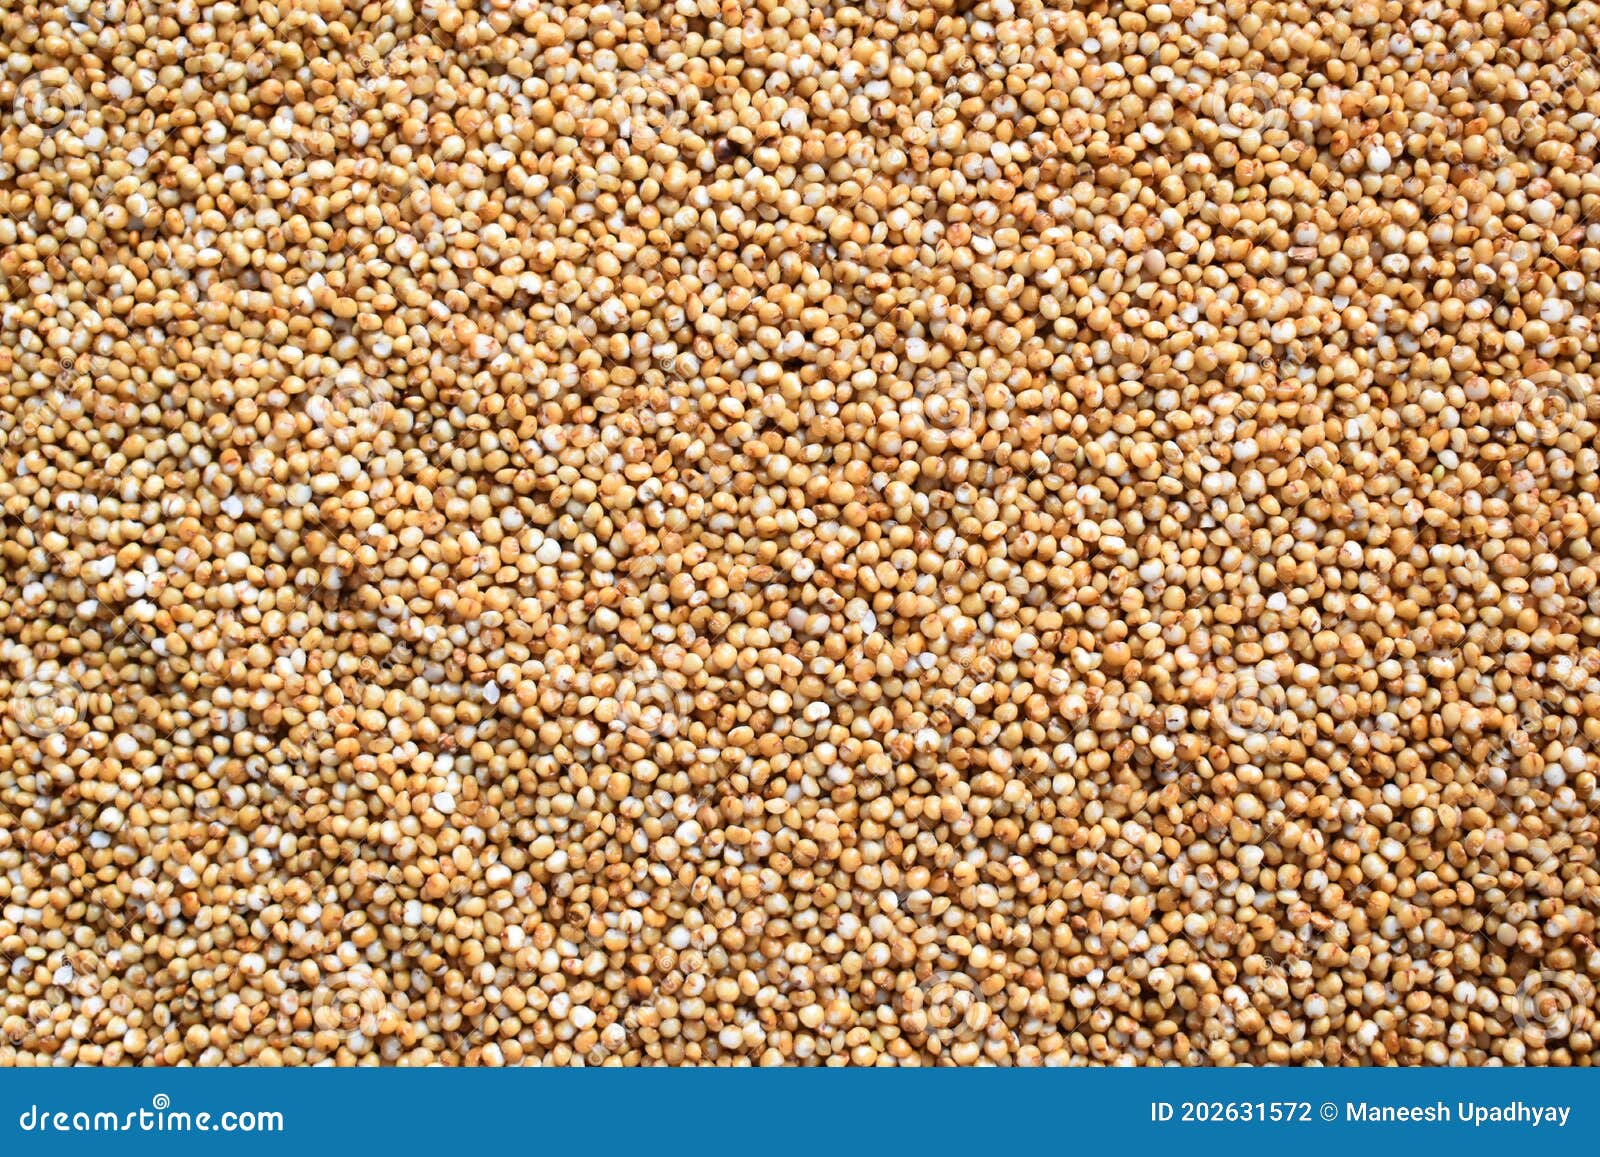 Raw Kodo millet stock photo. Image of millet, diet, india - 202631572